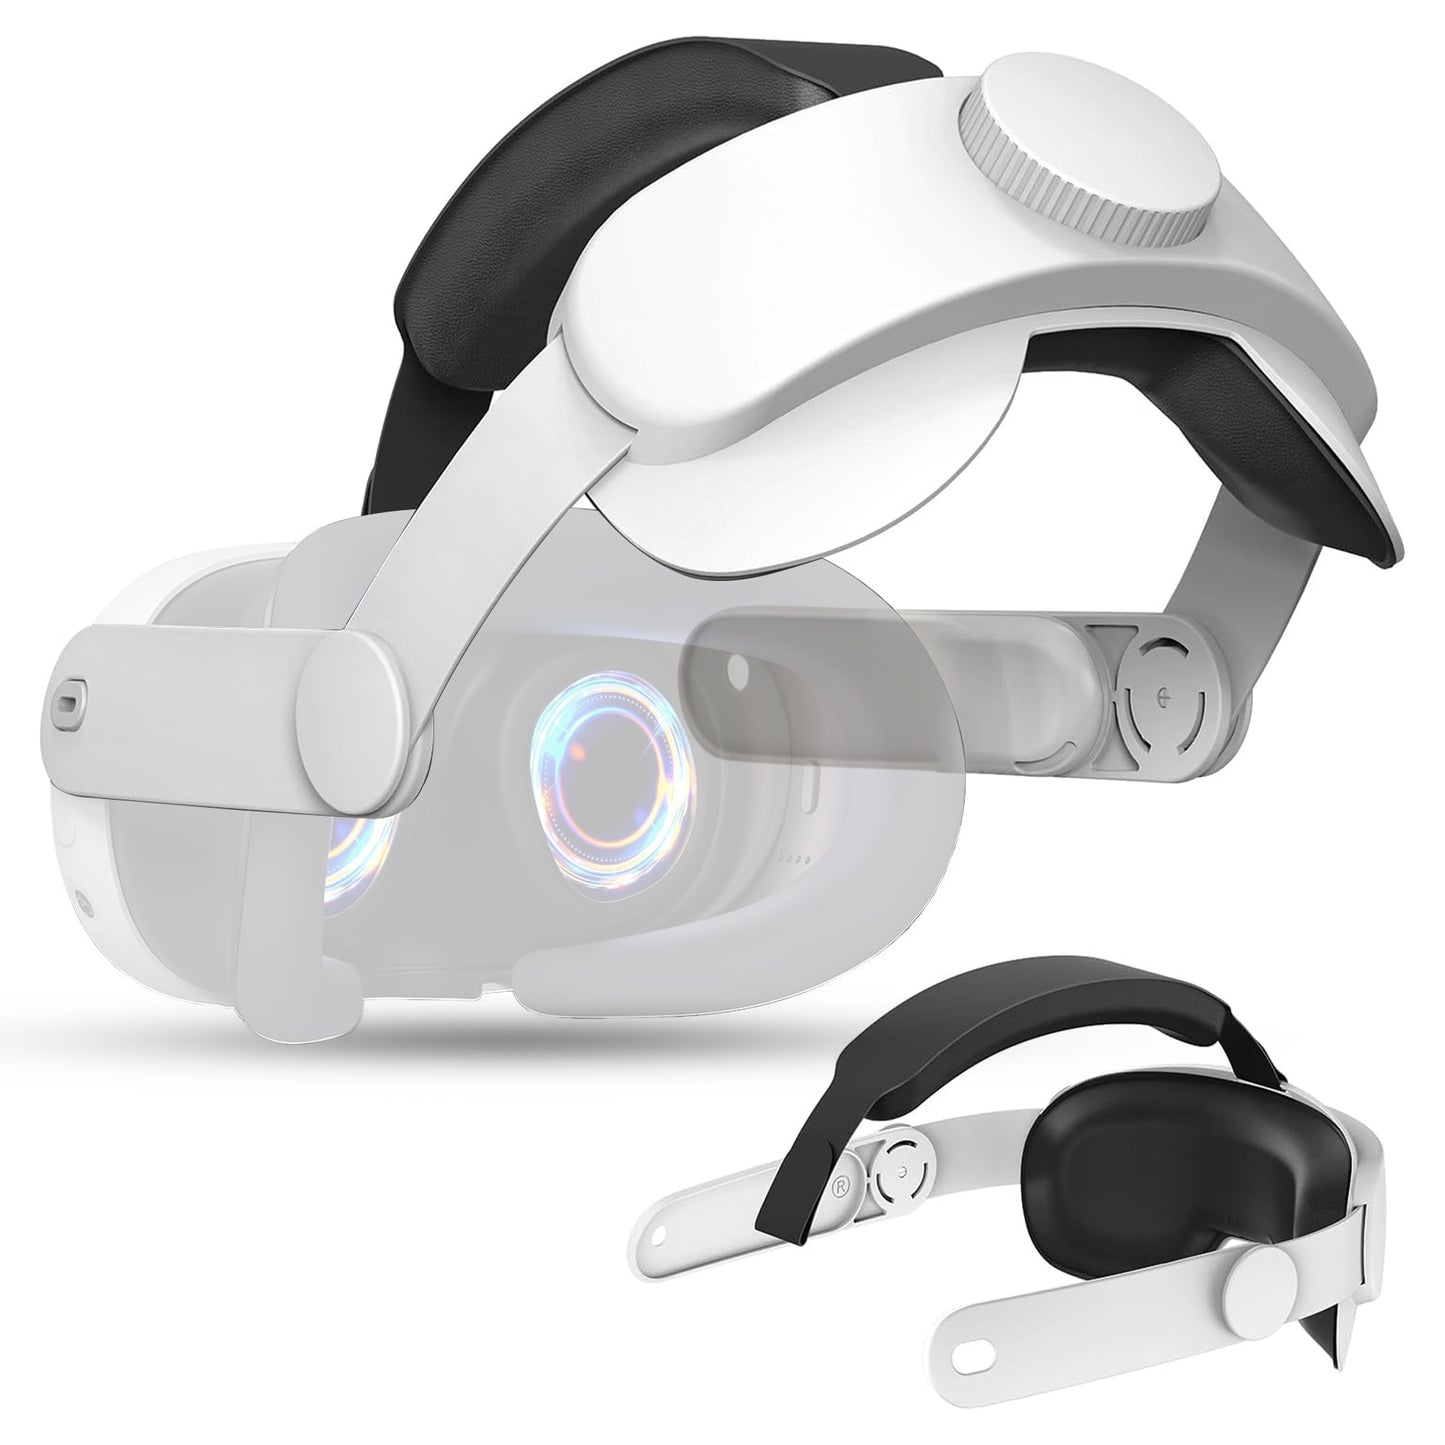 Head Strap Fit for Meta/Oculus Quest 3 - Adjustable Elite Strap  Pressure-Free Lightweight Bundle Replacement for Enhanced Comfort, VR Accessories